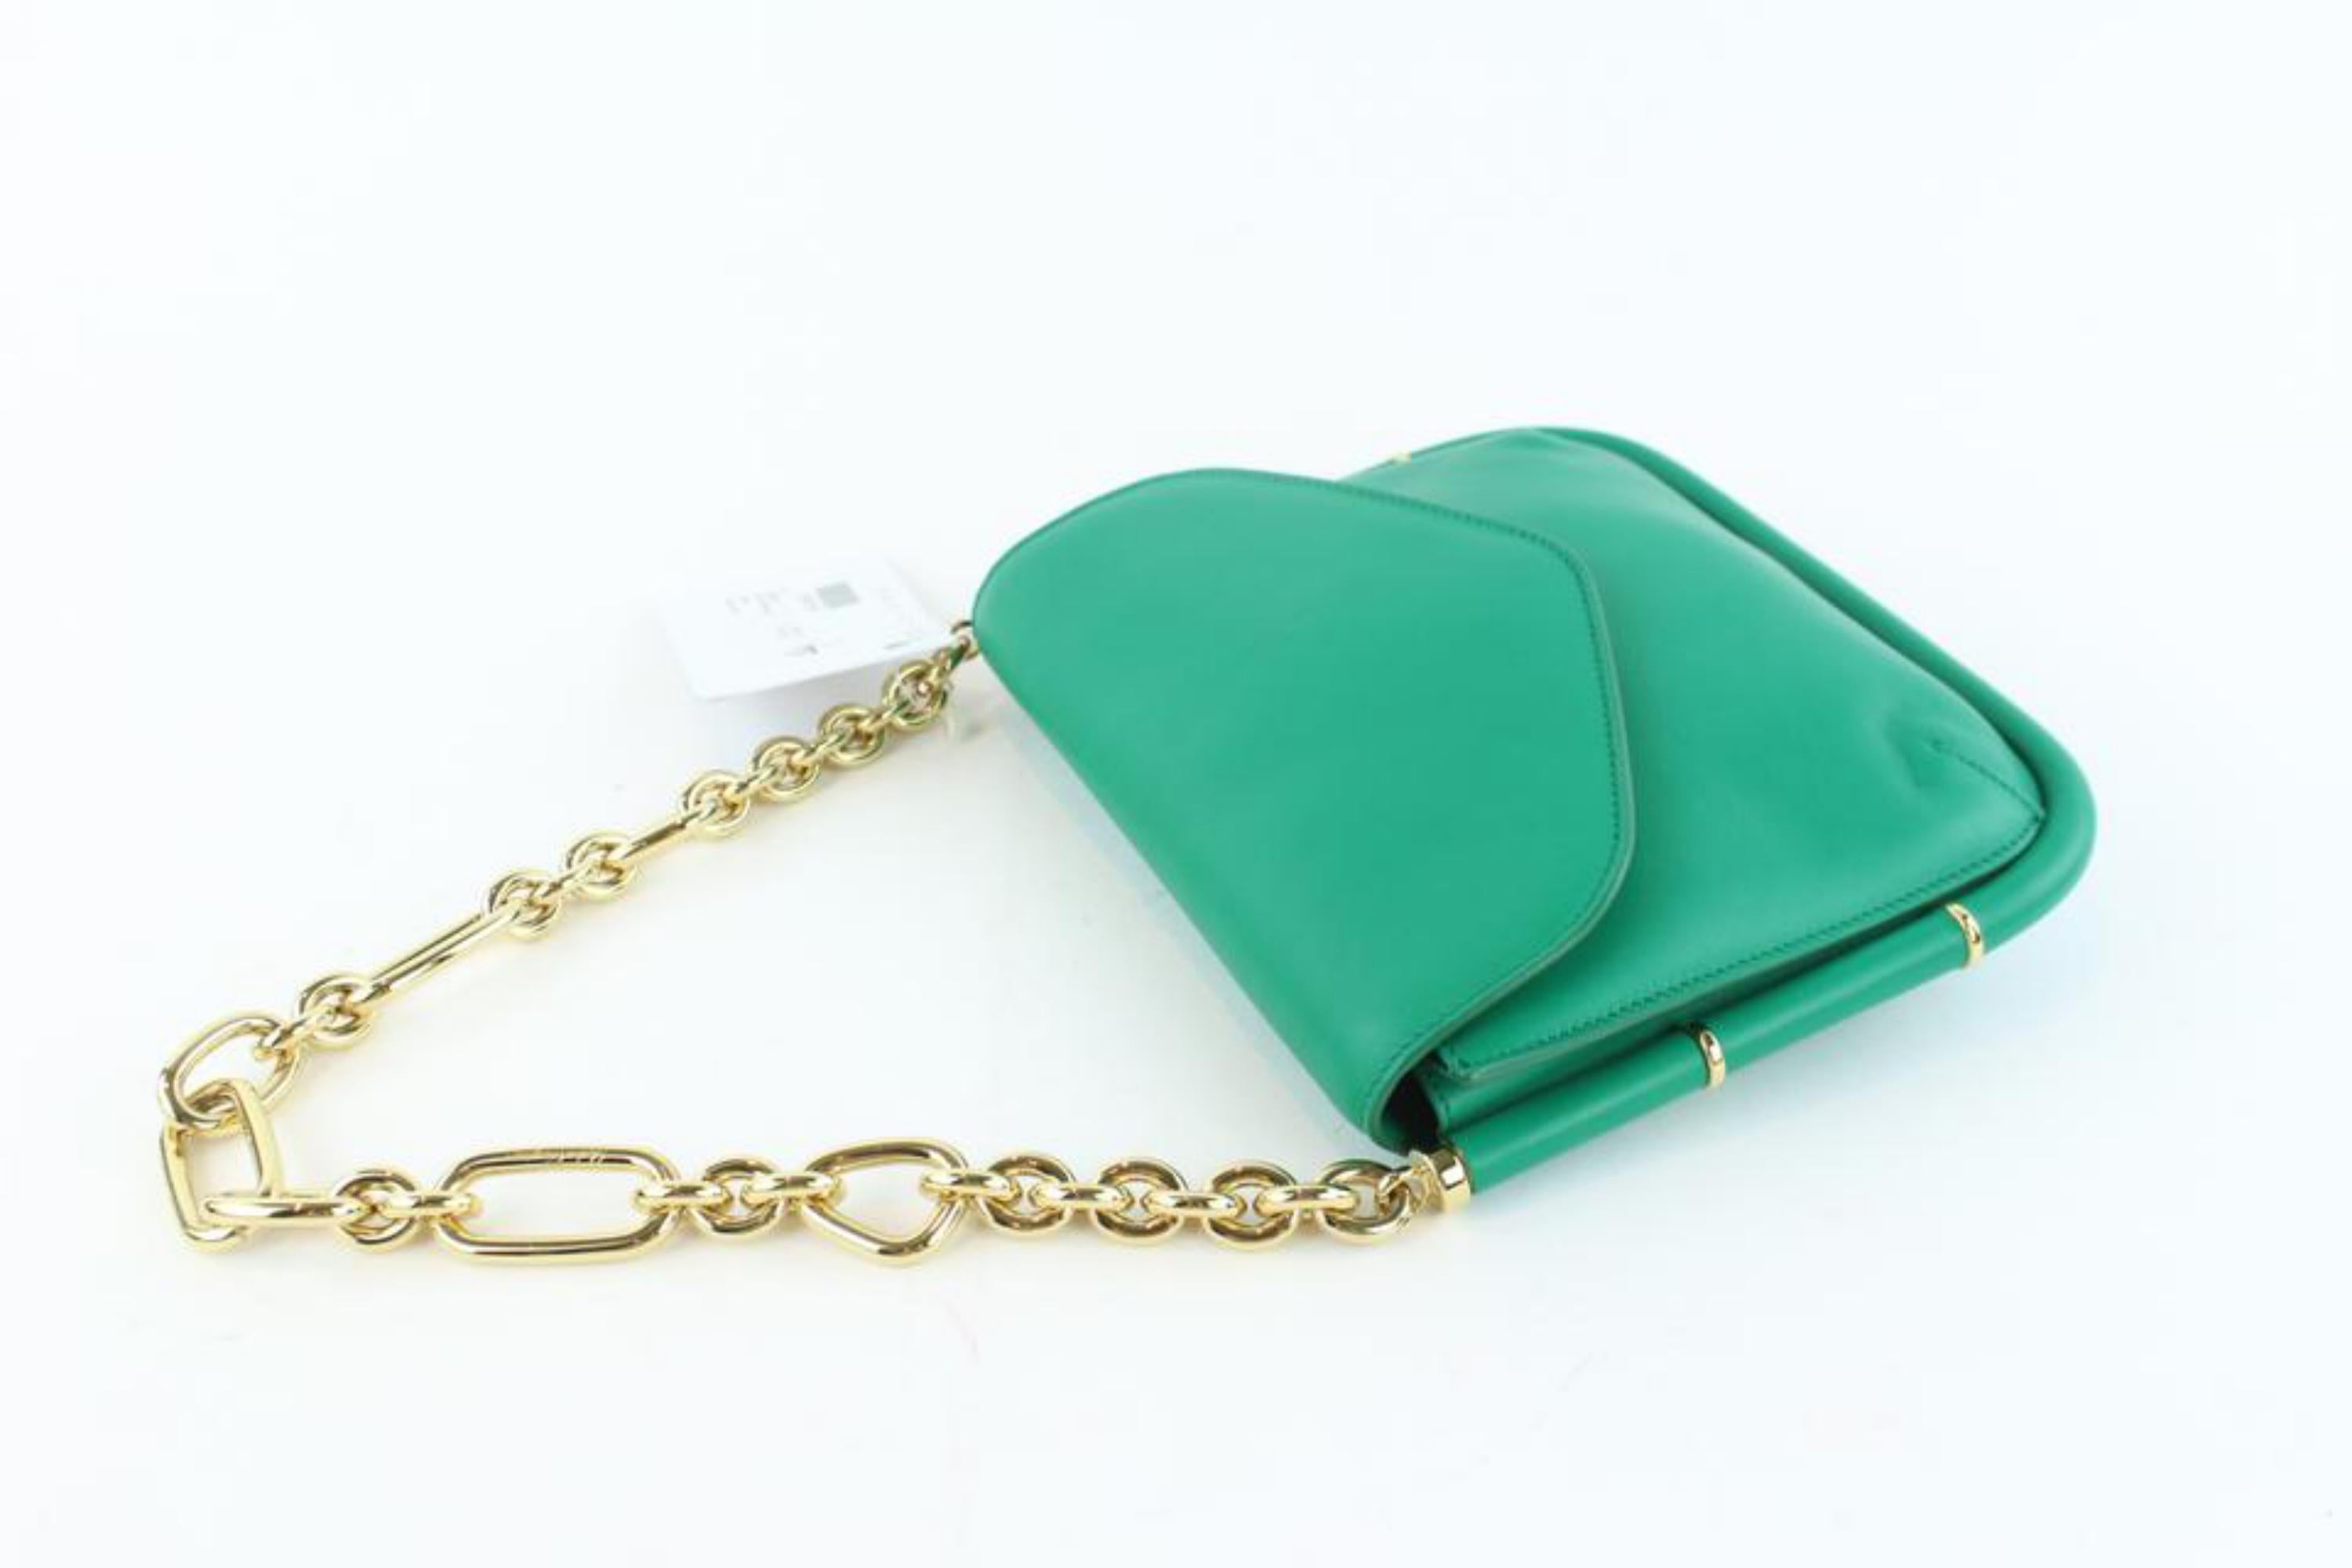 Salvatore Ferragamo Emerald Chain Flap 23mz1102 Green Leather Shoulder Bag For Sale 2